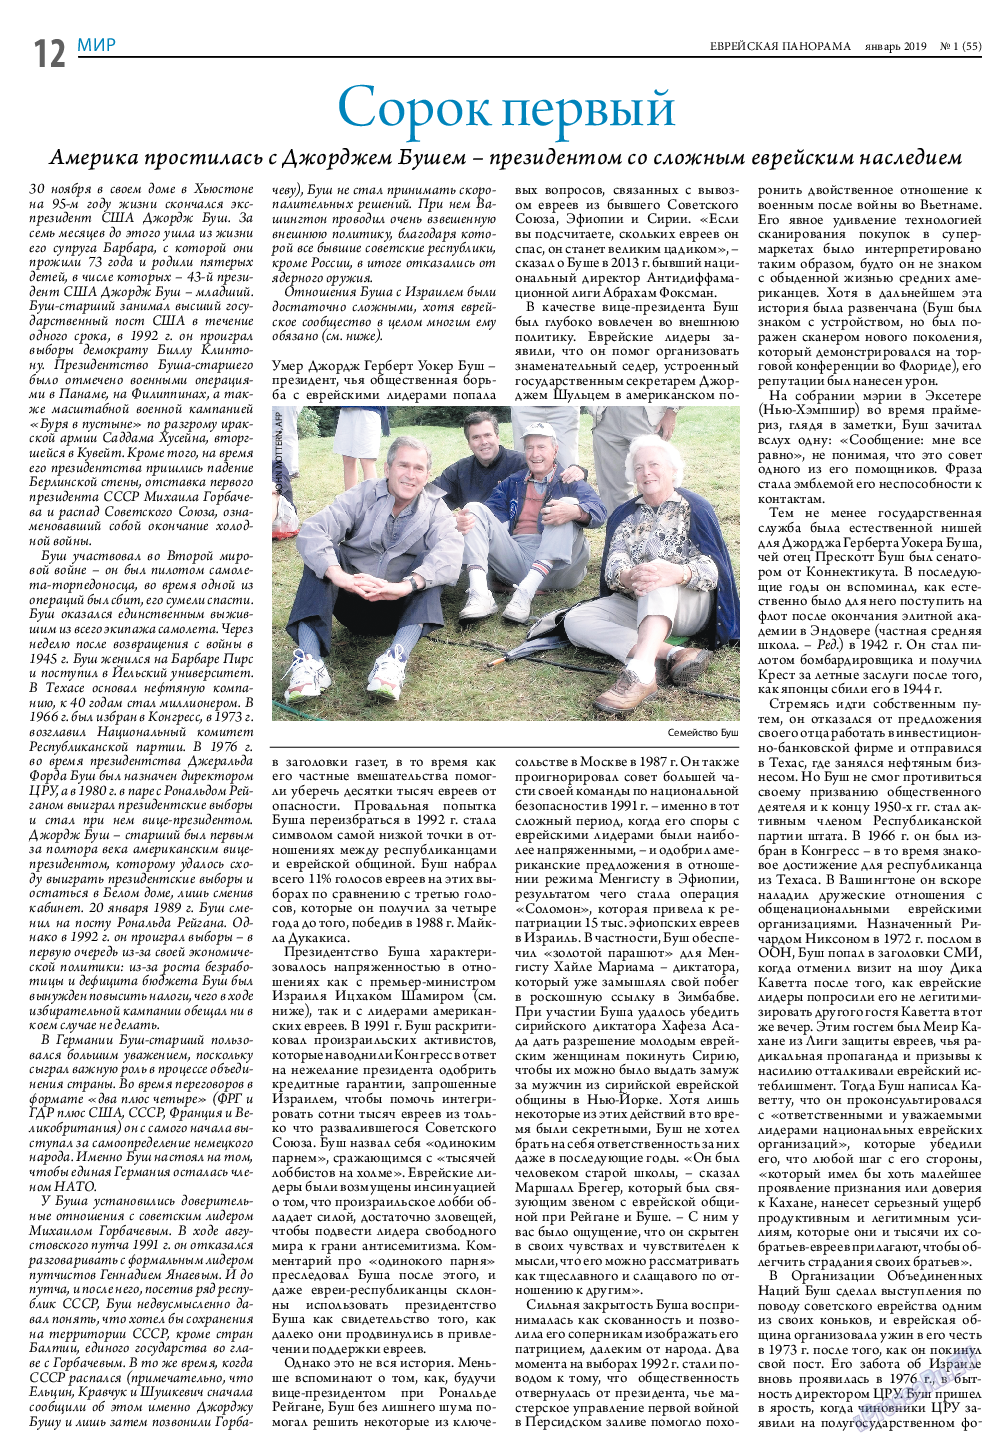 Еврейская панорама, газета. 2019 №1 стр.12